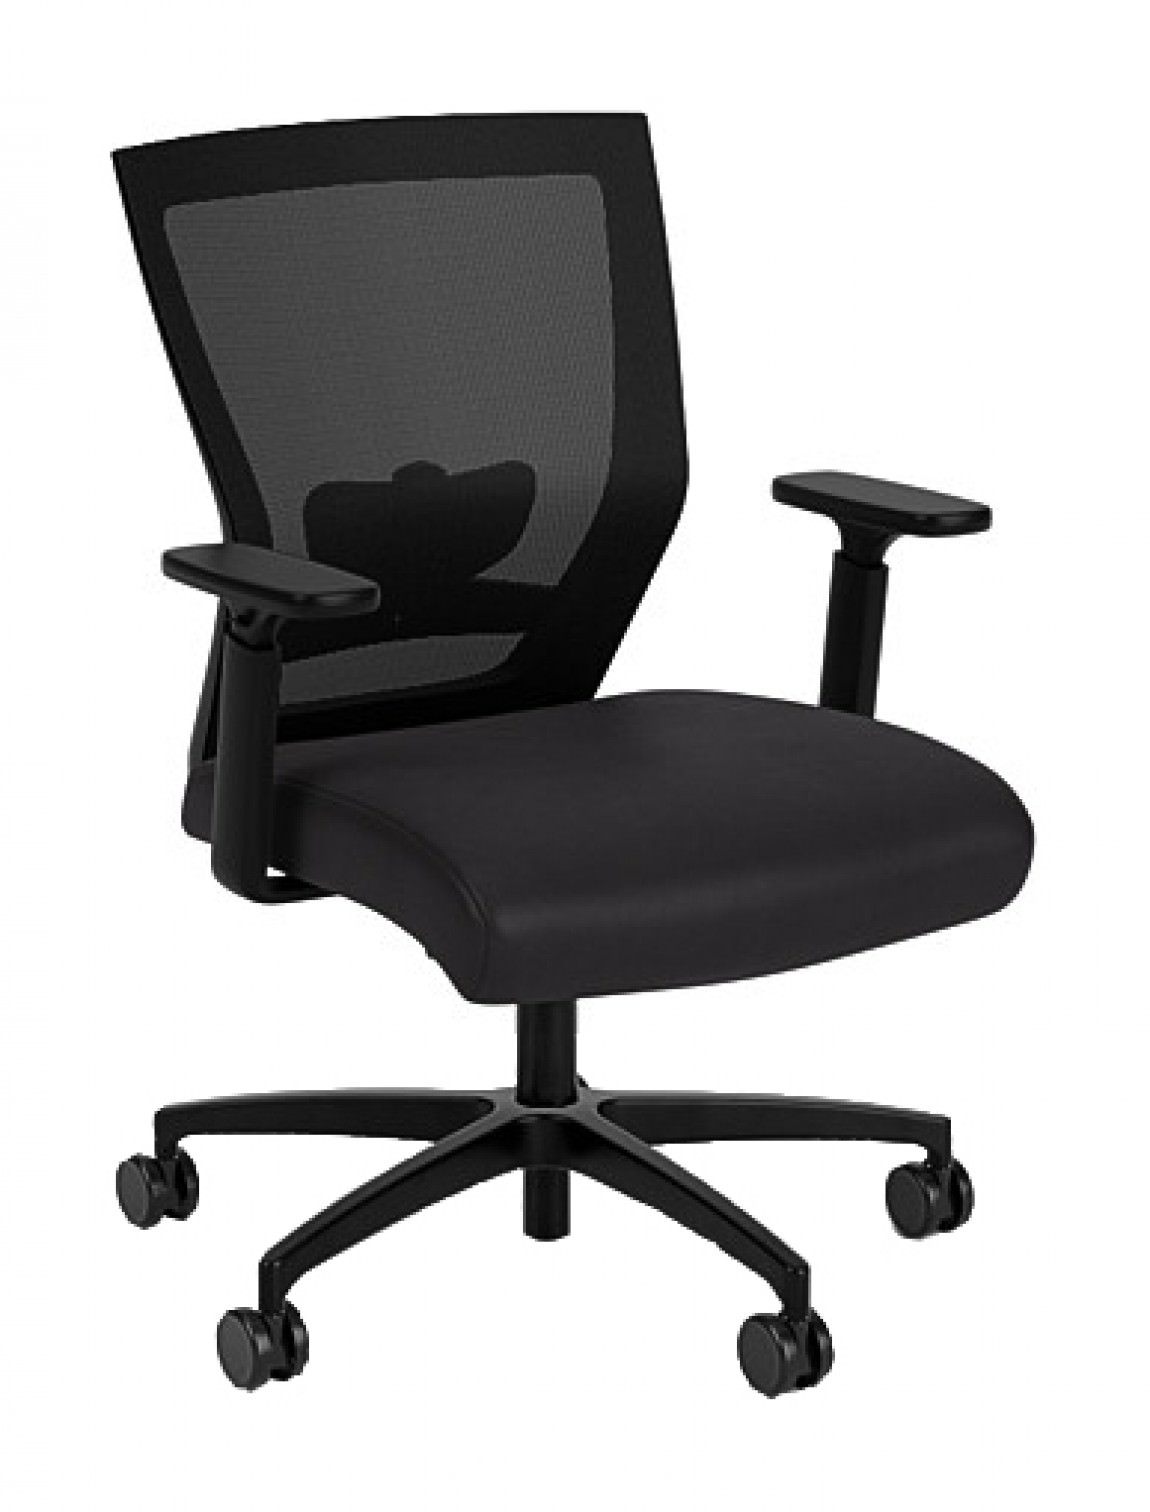 https://madisonliquidators.com/images/p/1150/29532-mid-back-office-chair-1.jpg